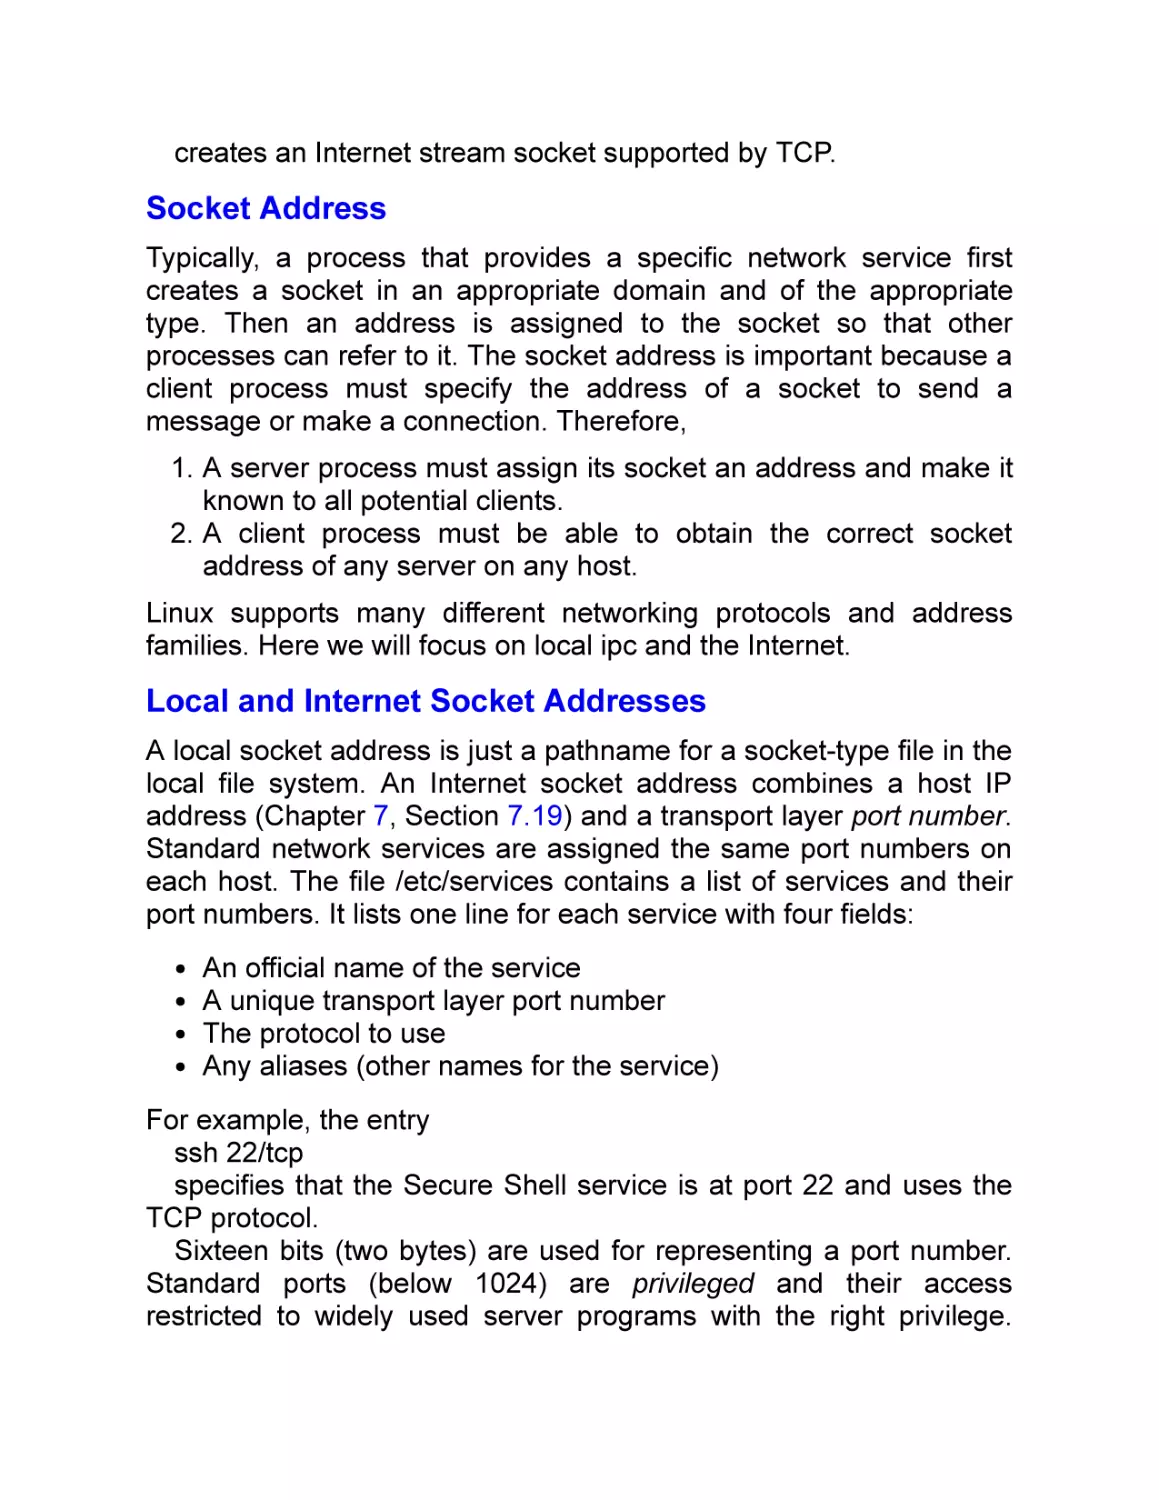 Socket Address
Local and Internet Socket Addresses